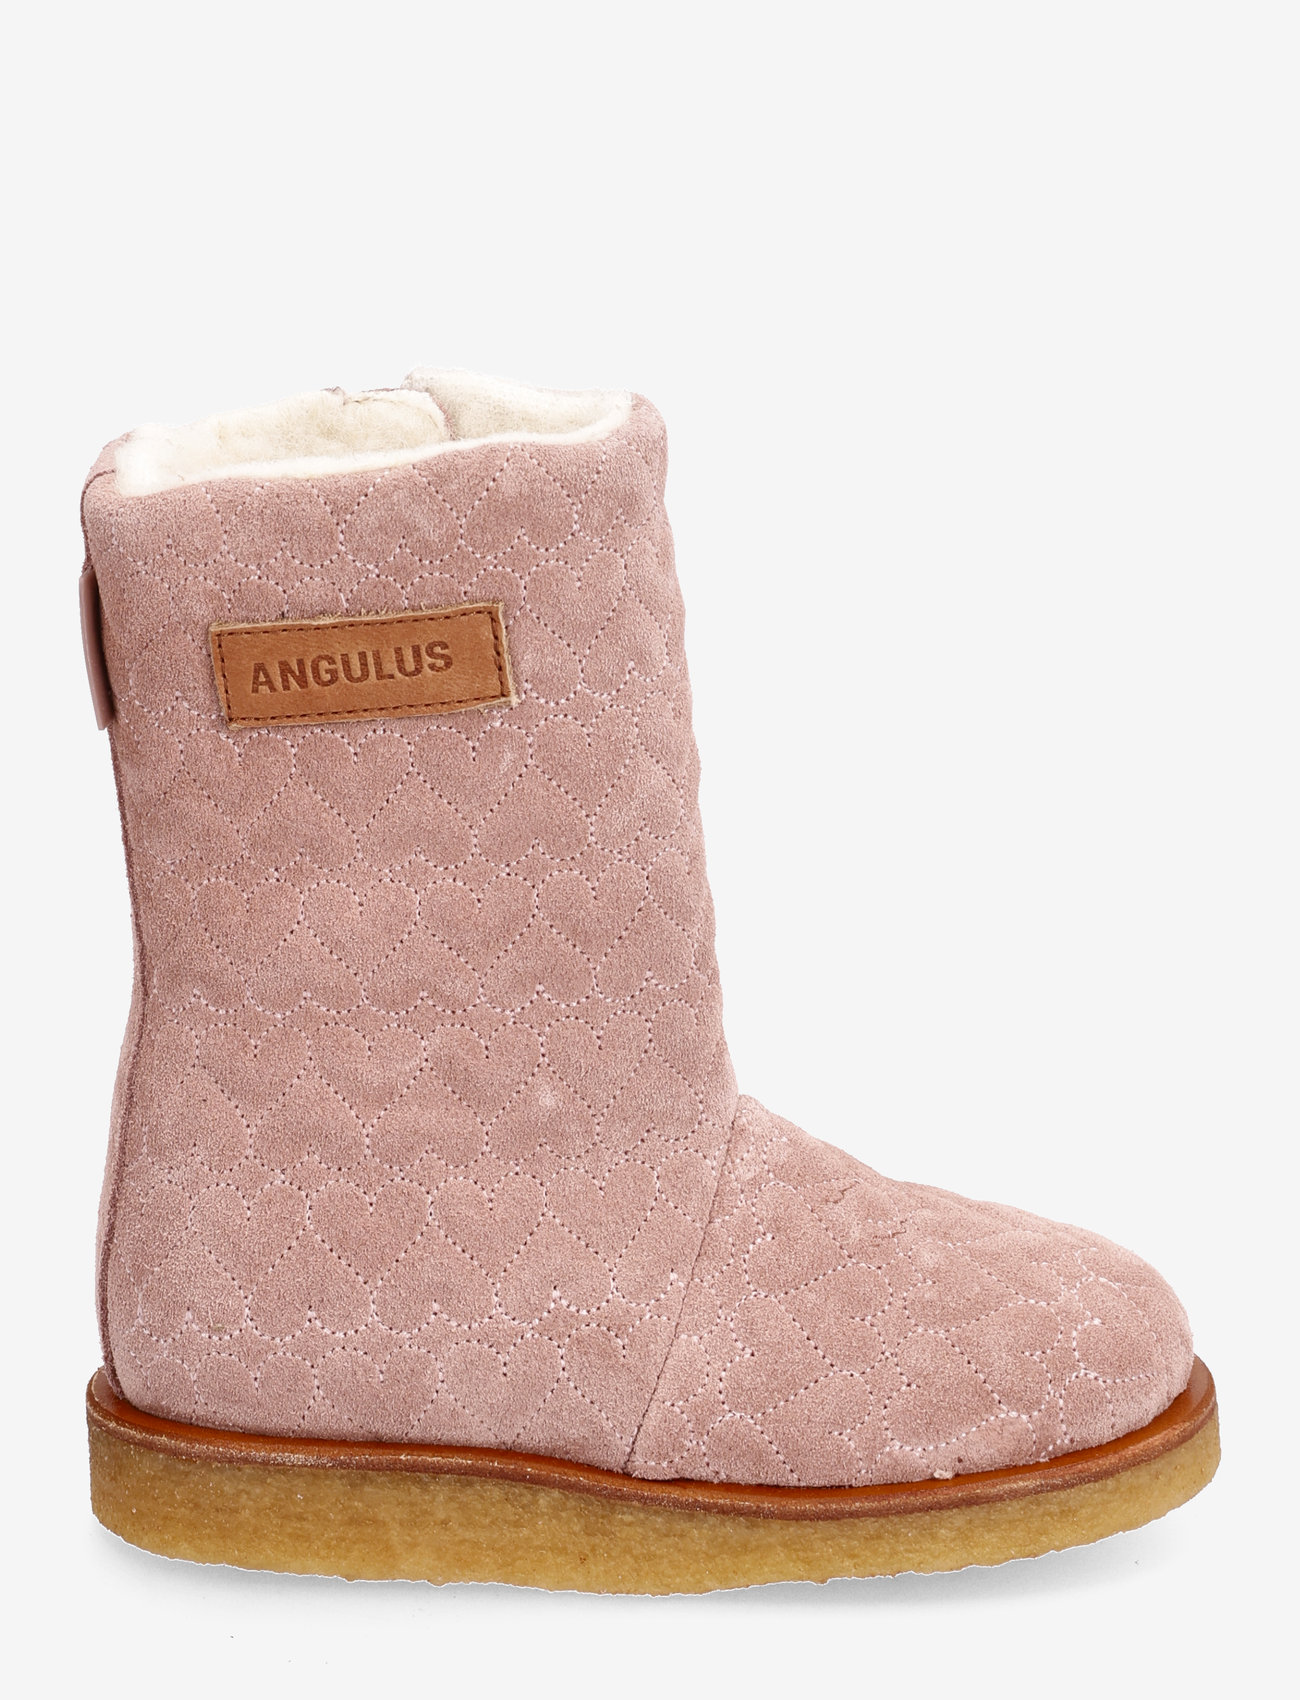 ANGULUS - Boots - flat - with zipper - vaikams - 1773/1789 pale rose/cognac - 1